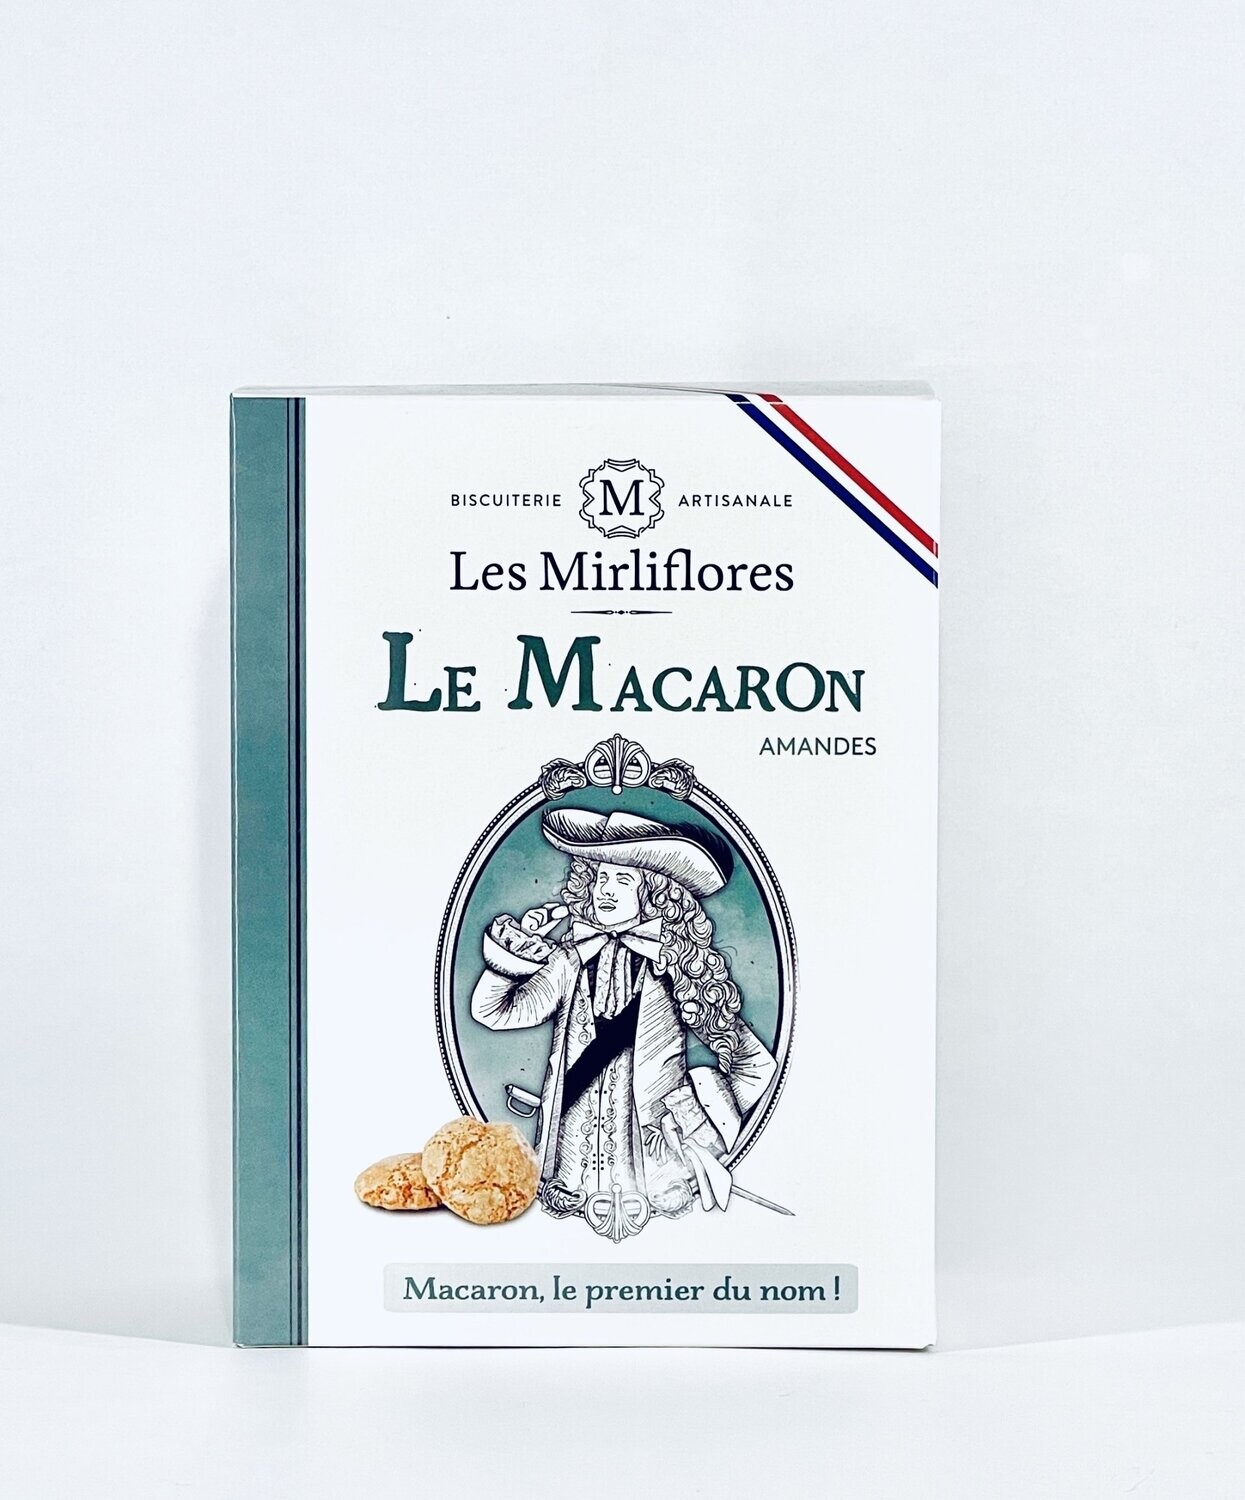 Biscuits Le Macaron Amandes